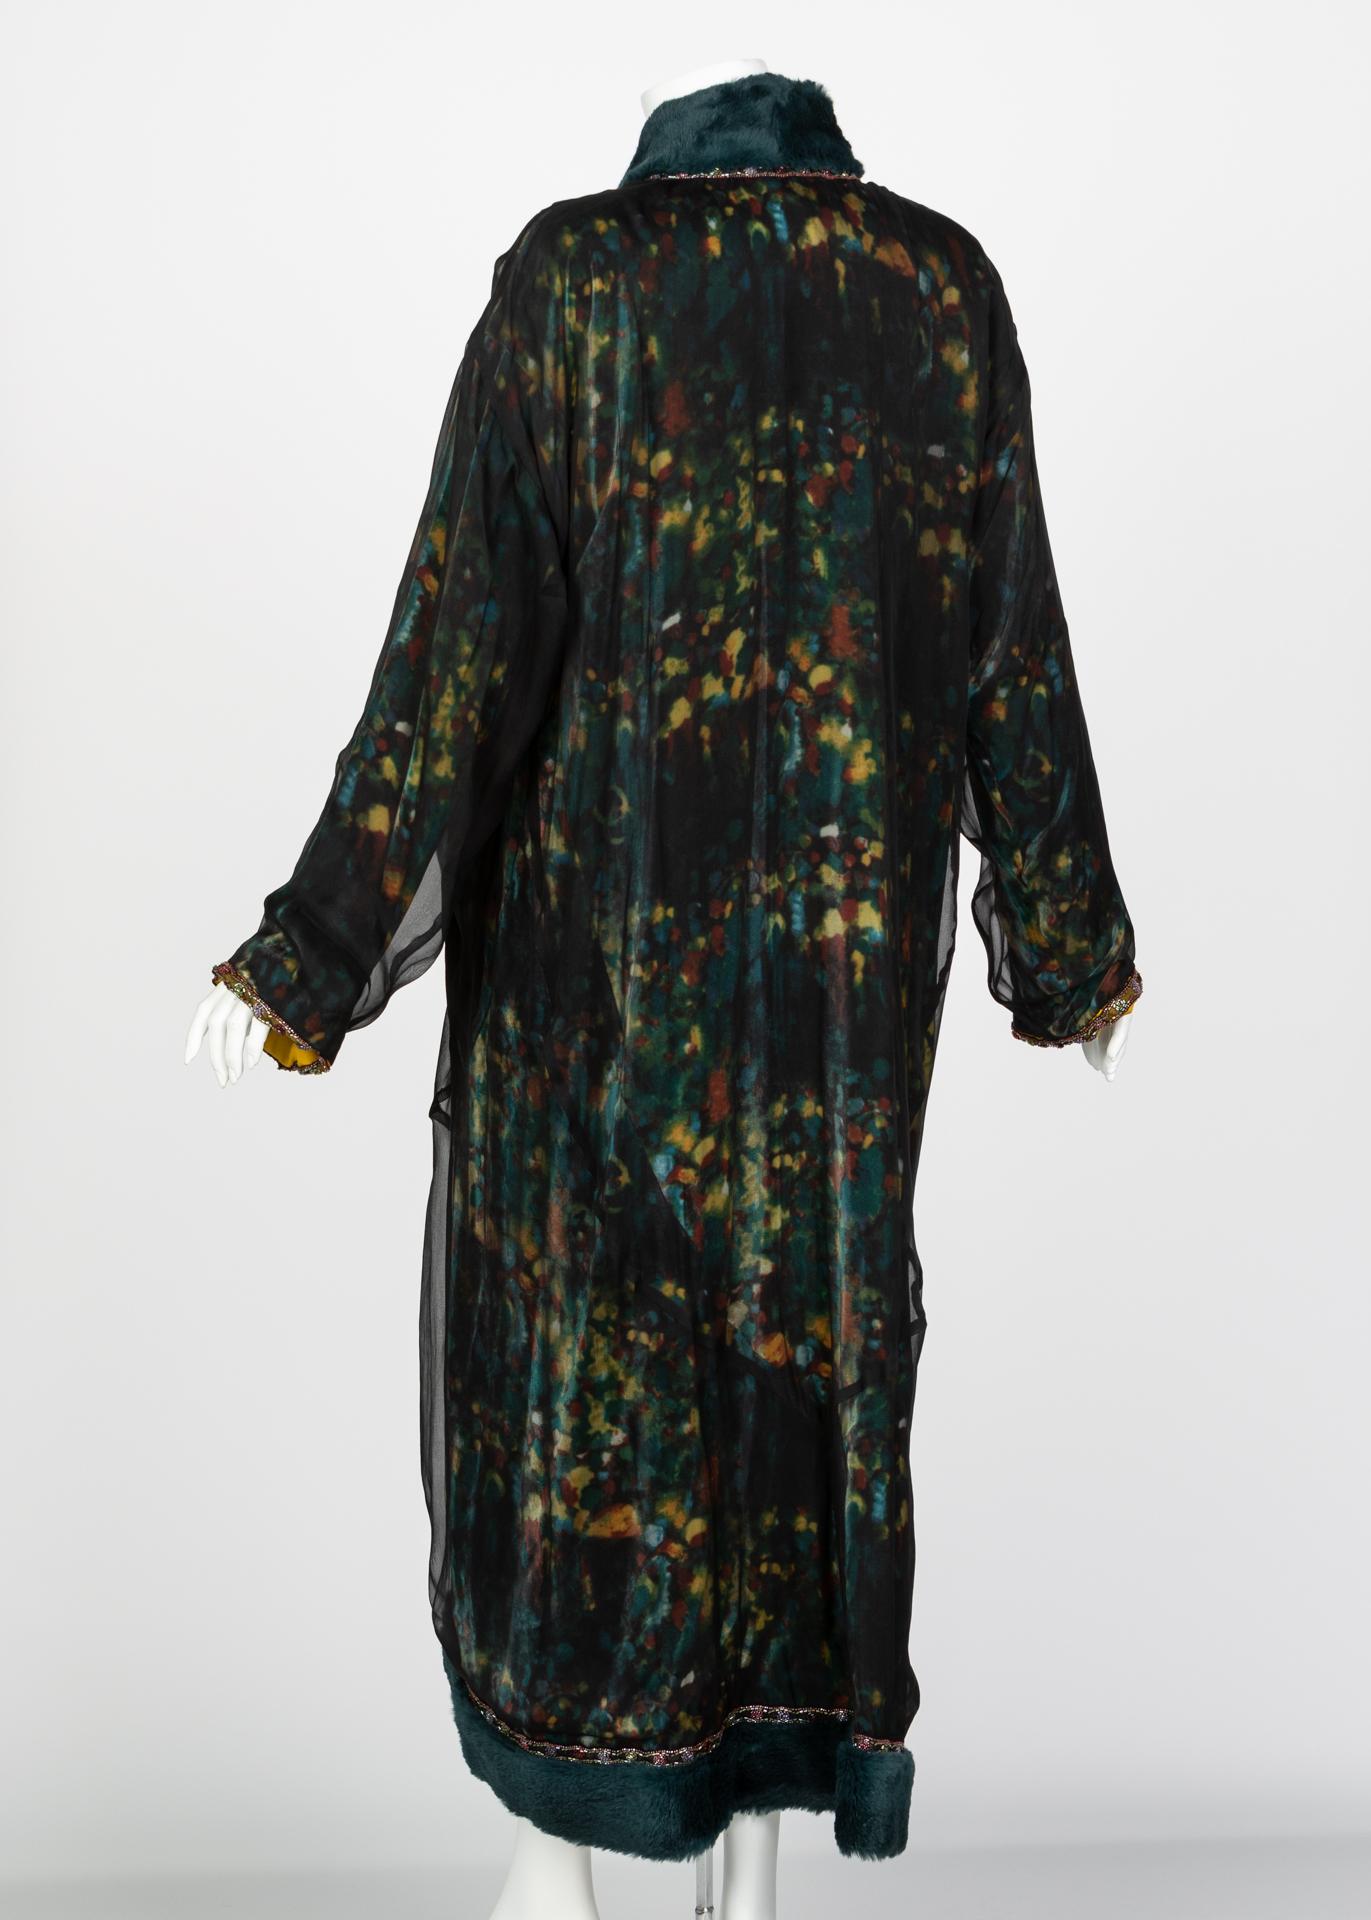 Women's Chanel Elaborate Multicolored Silk Chiffon Velvet Trim Beaded Evening Coat, 1997